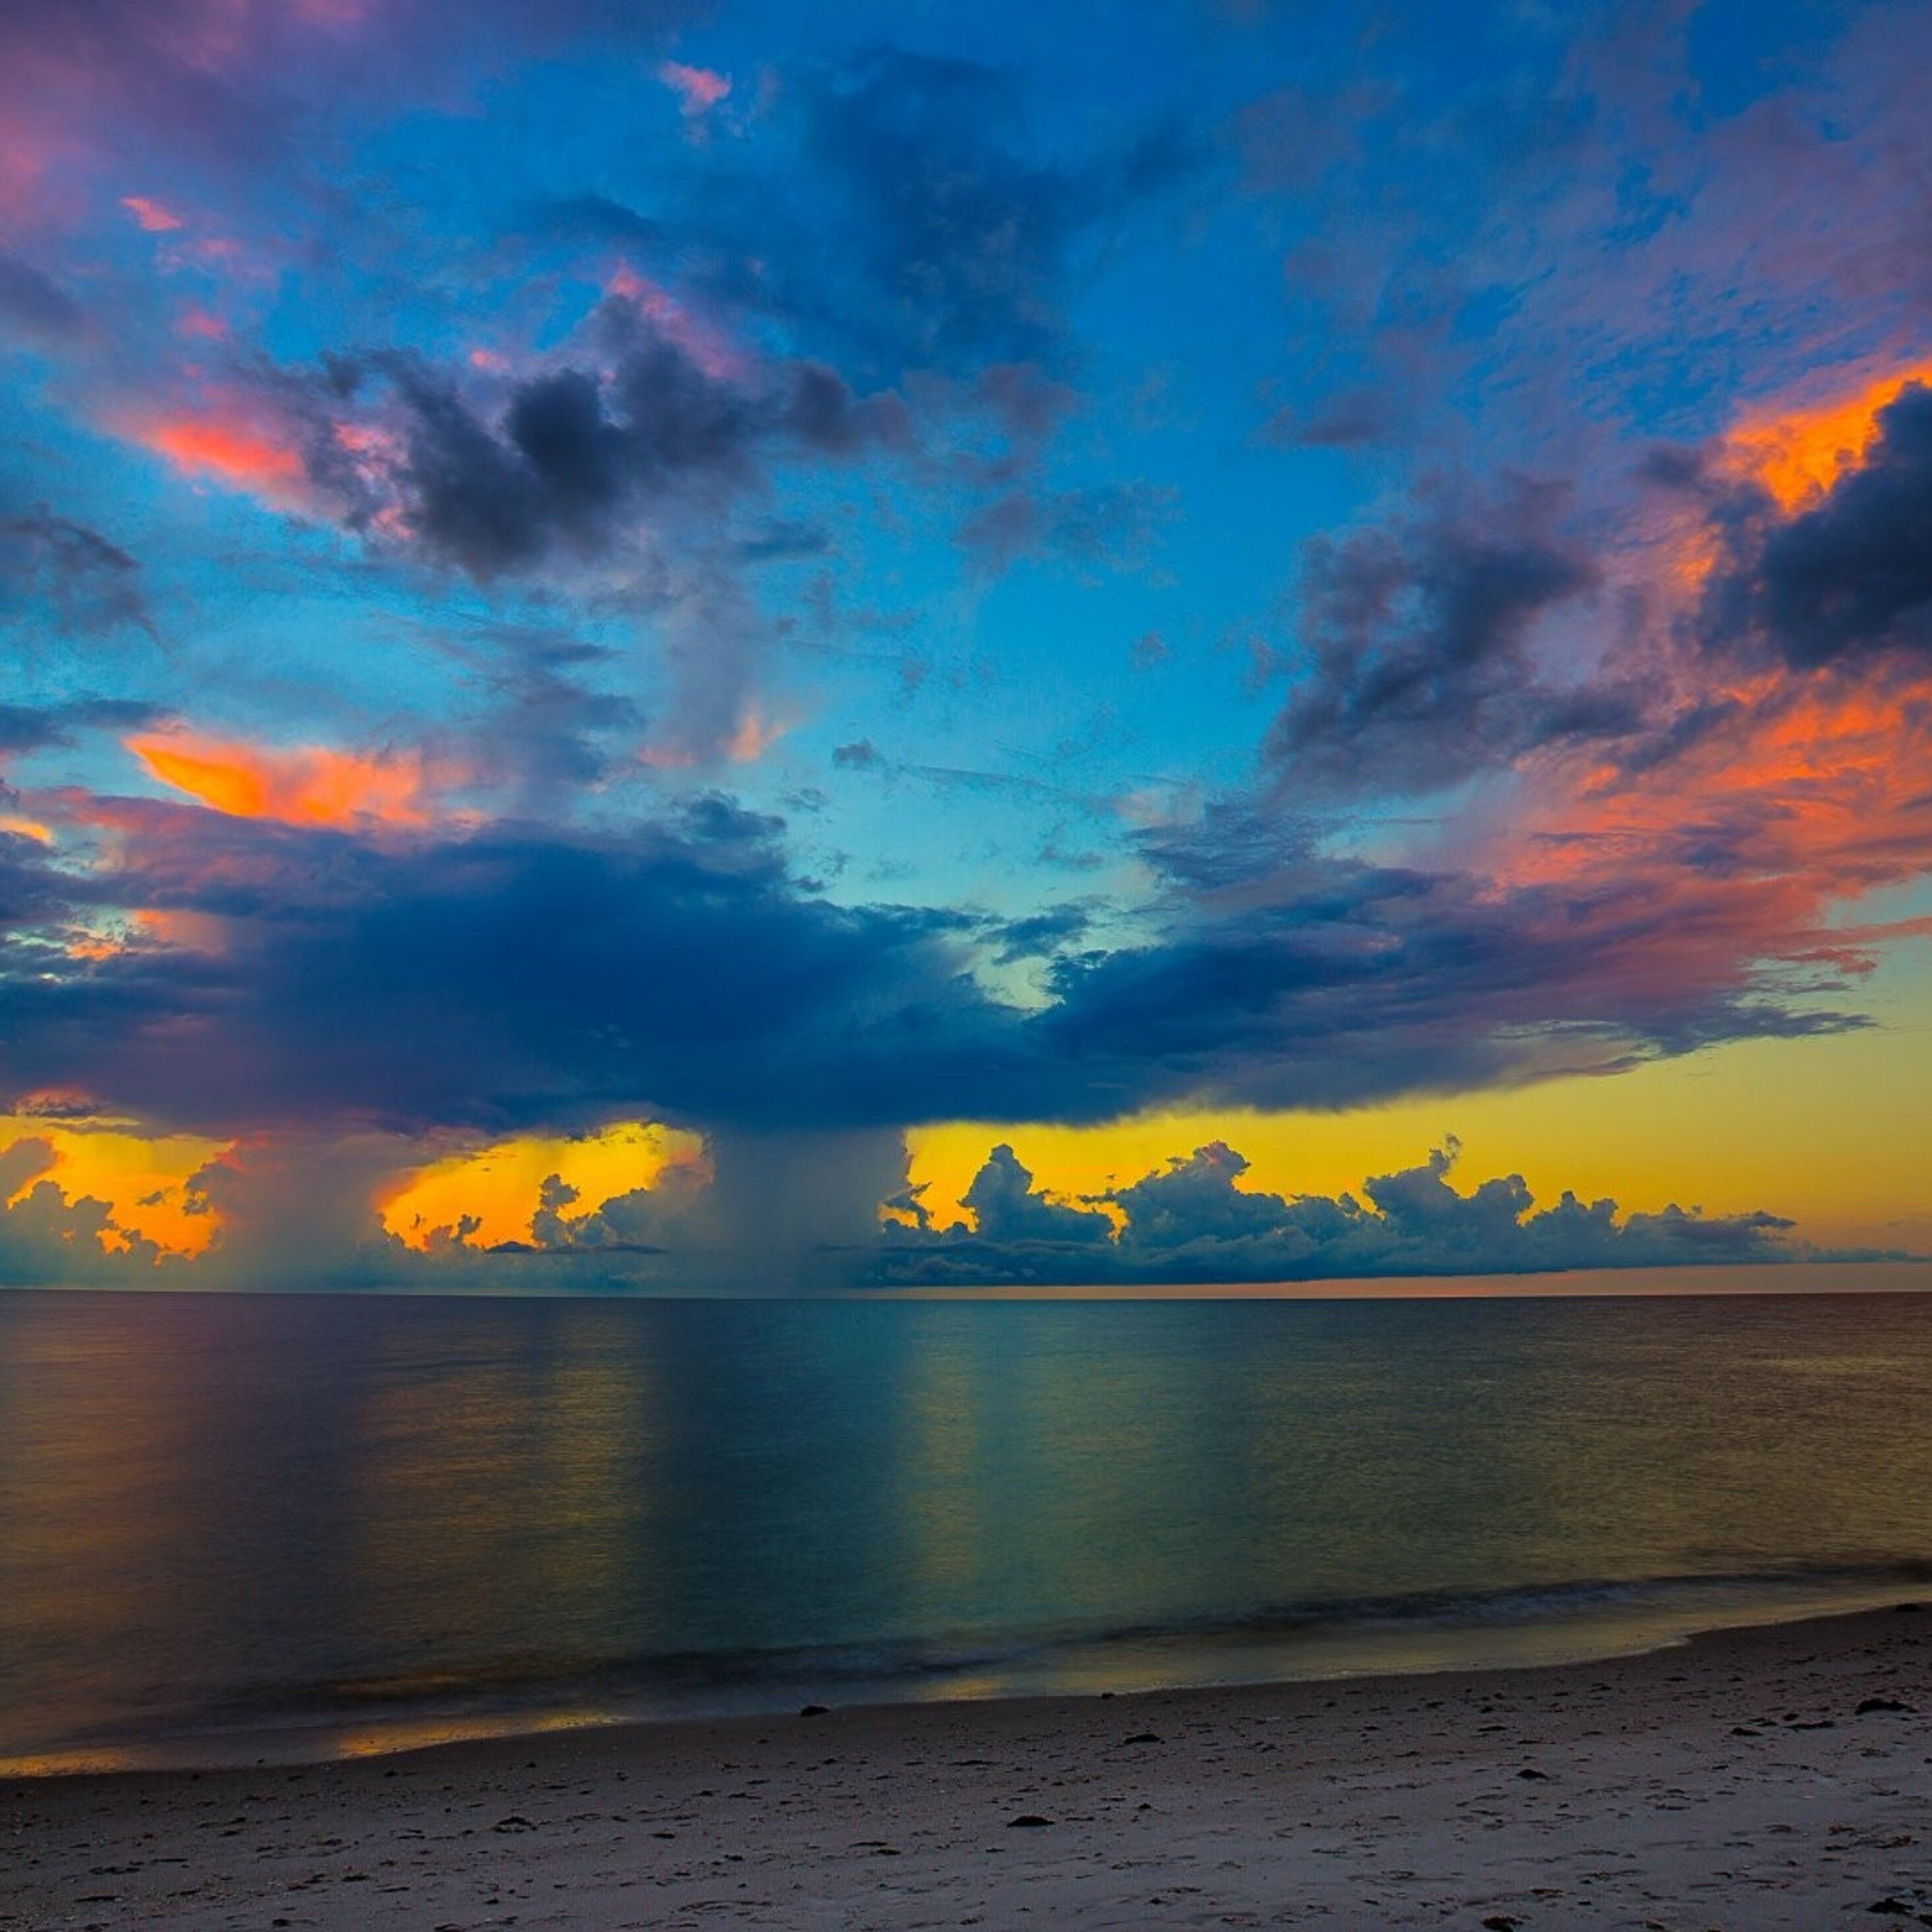 Florida Beach Sunset iPad Pro Retina Display HD 4k Wallpaper, Image, Background, Photo and Picture